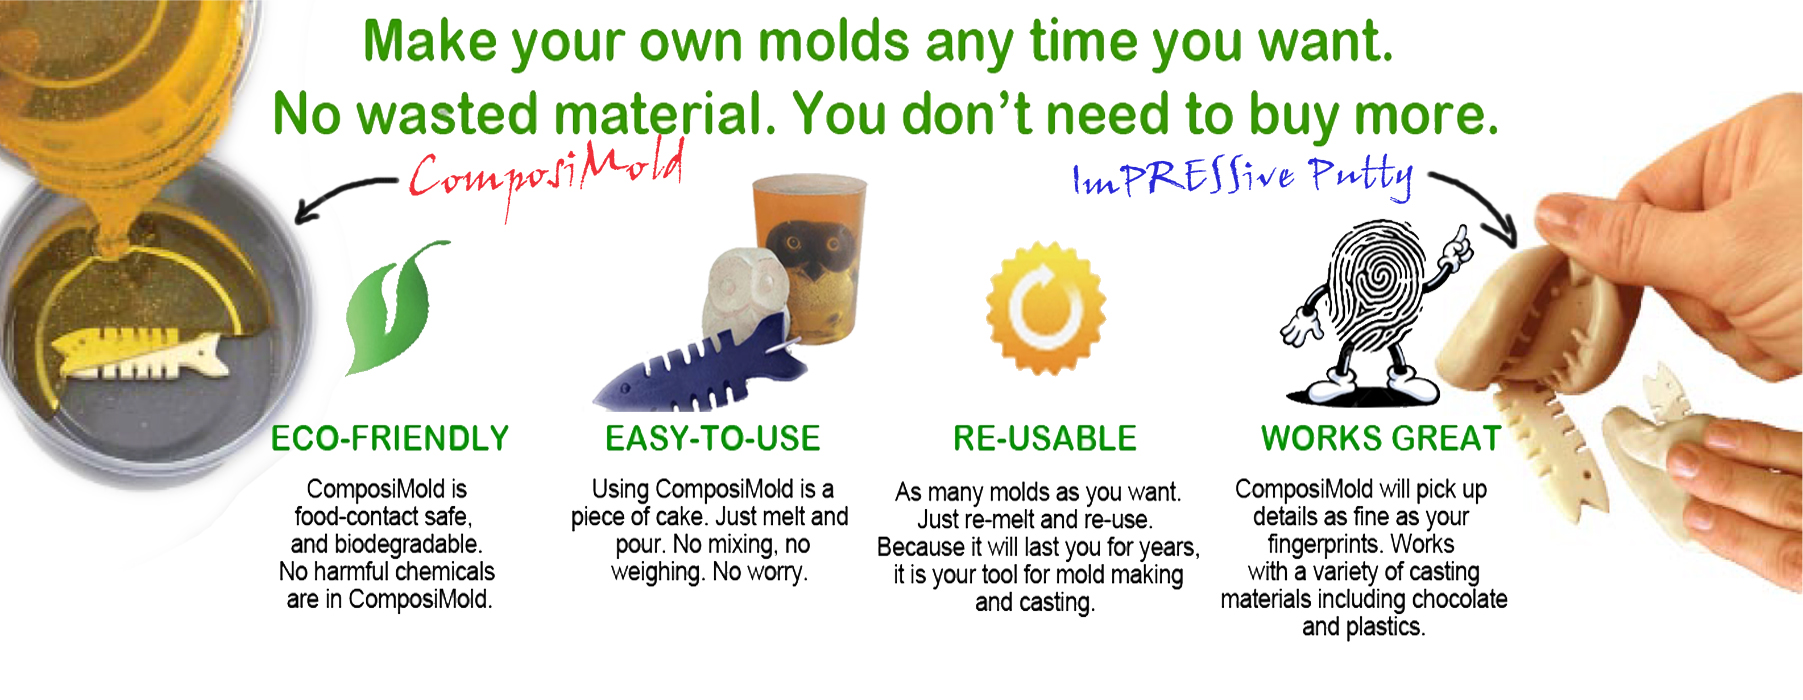 ComposiMold and ImPRESSive Putty Reusable Molding Materials